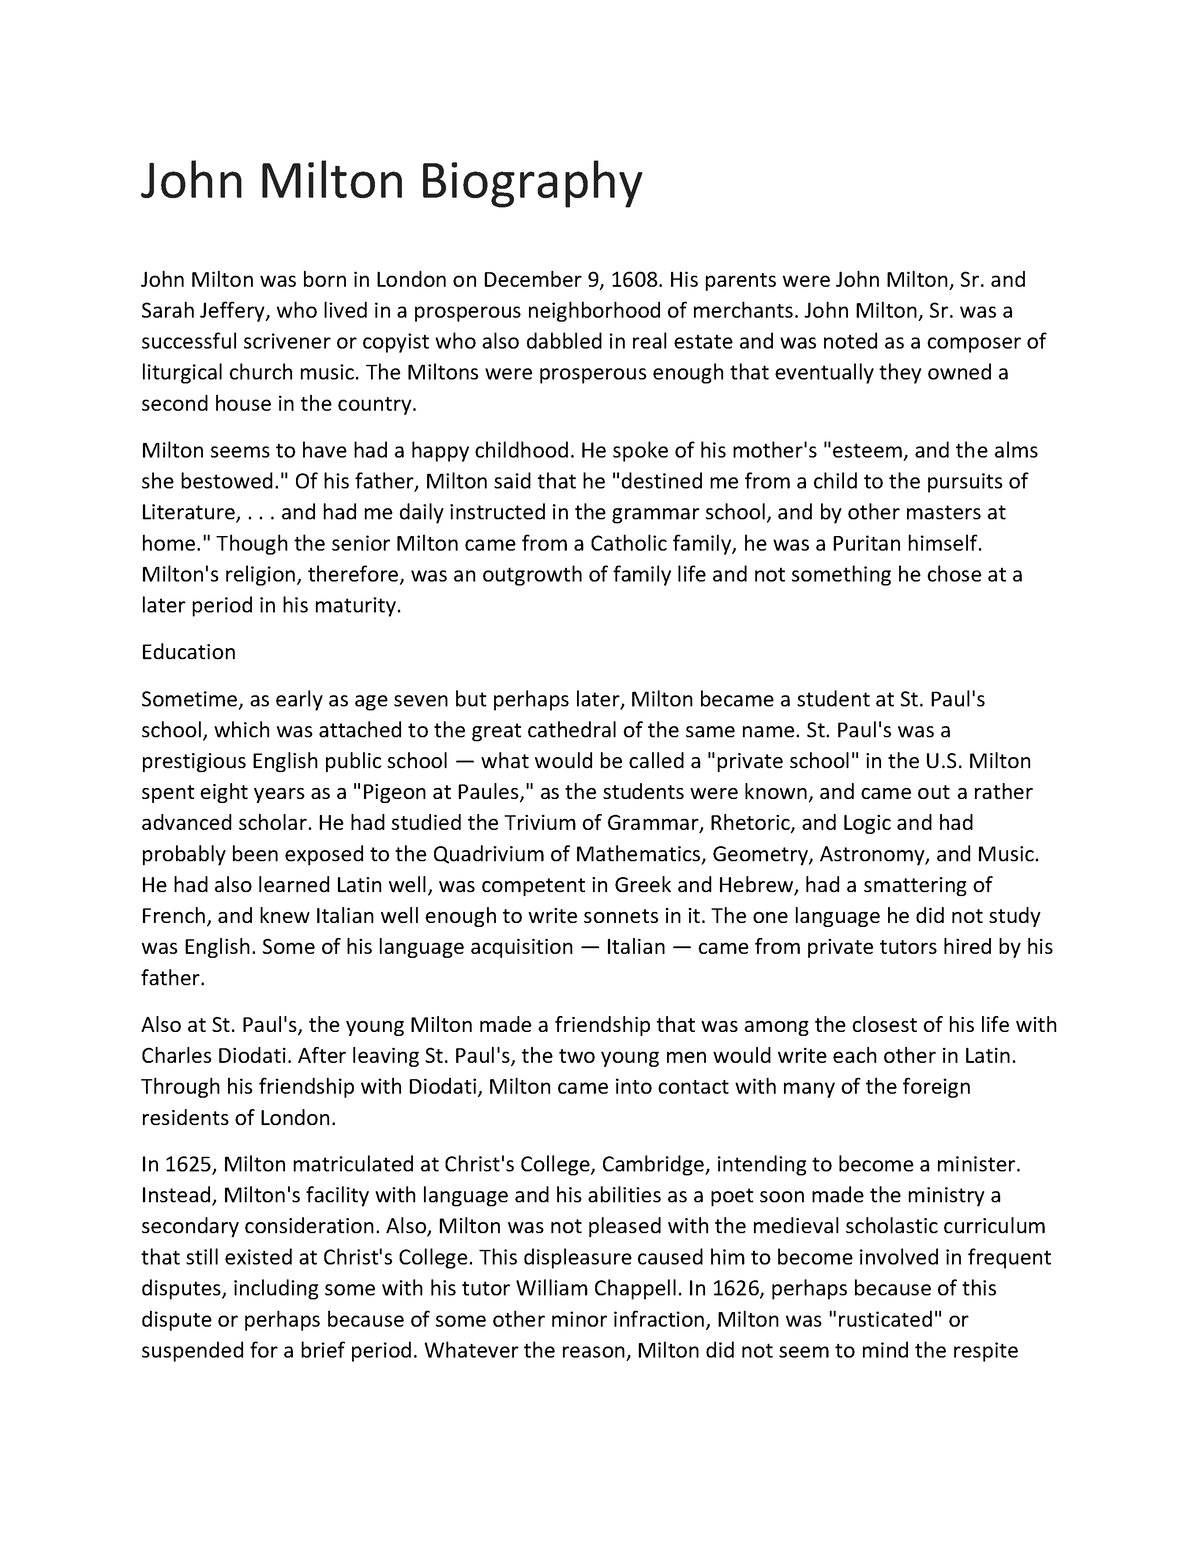 Biography of John Milton - John Milton Biography John Milton was born ...